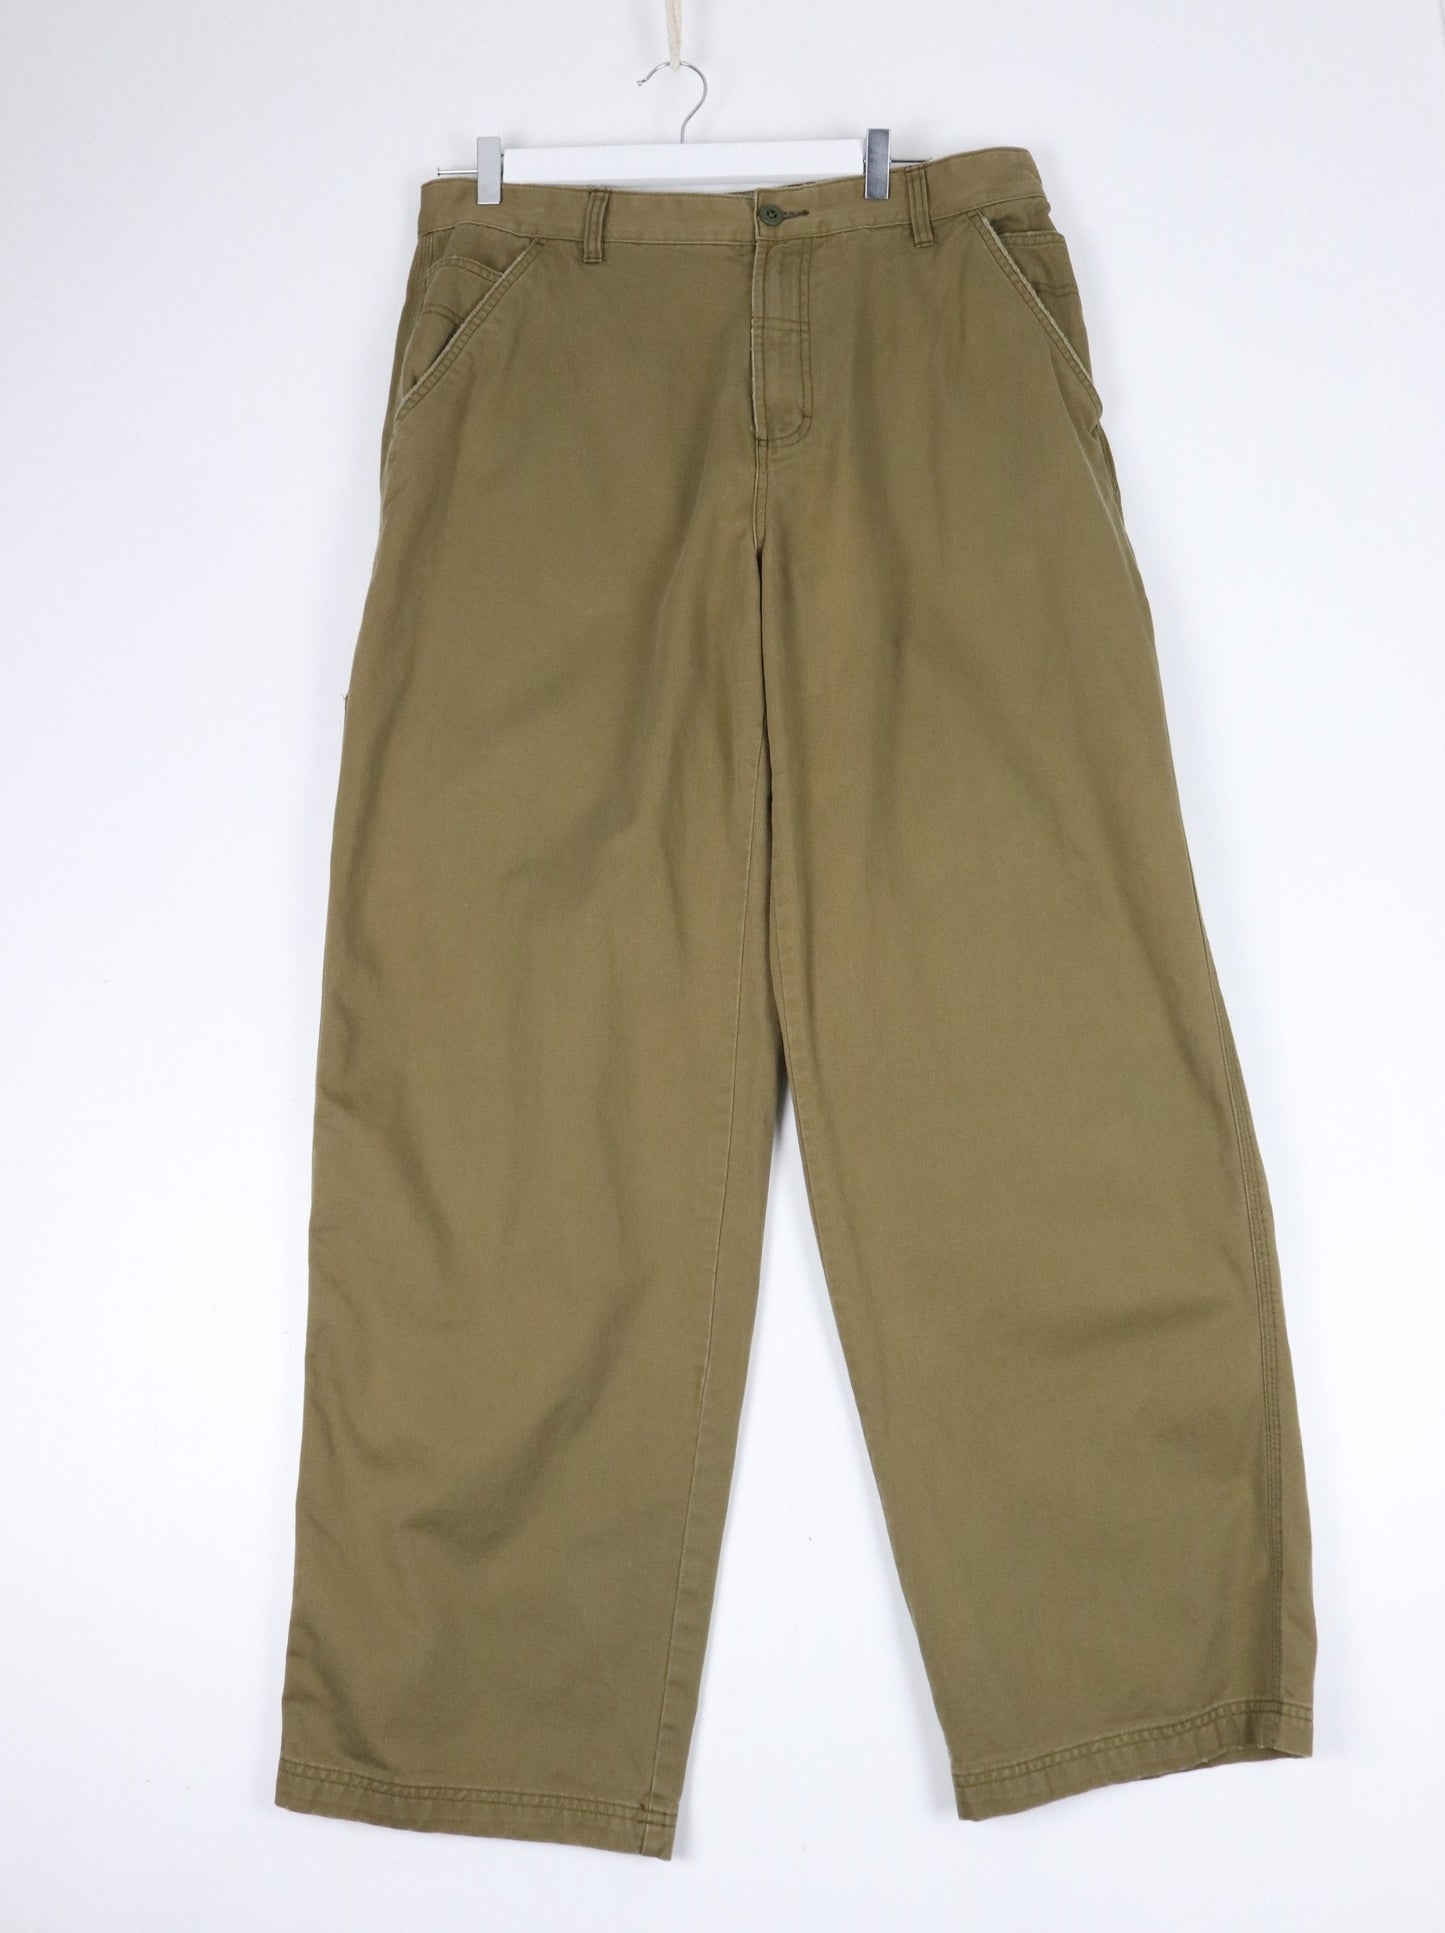 Vintage Tommy Hilfiger Pants Mens 34 x 32 Khaki Green Chino